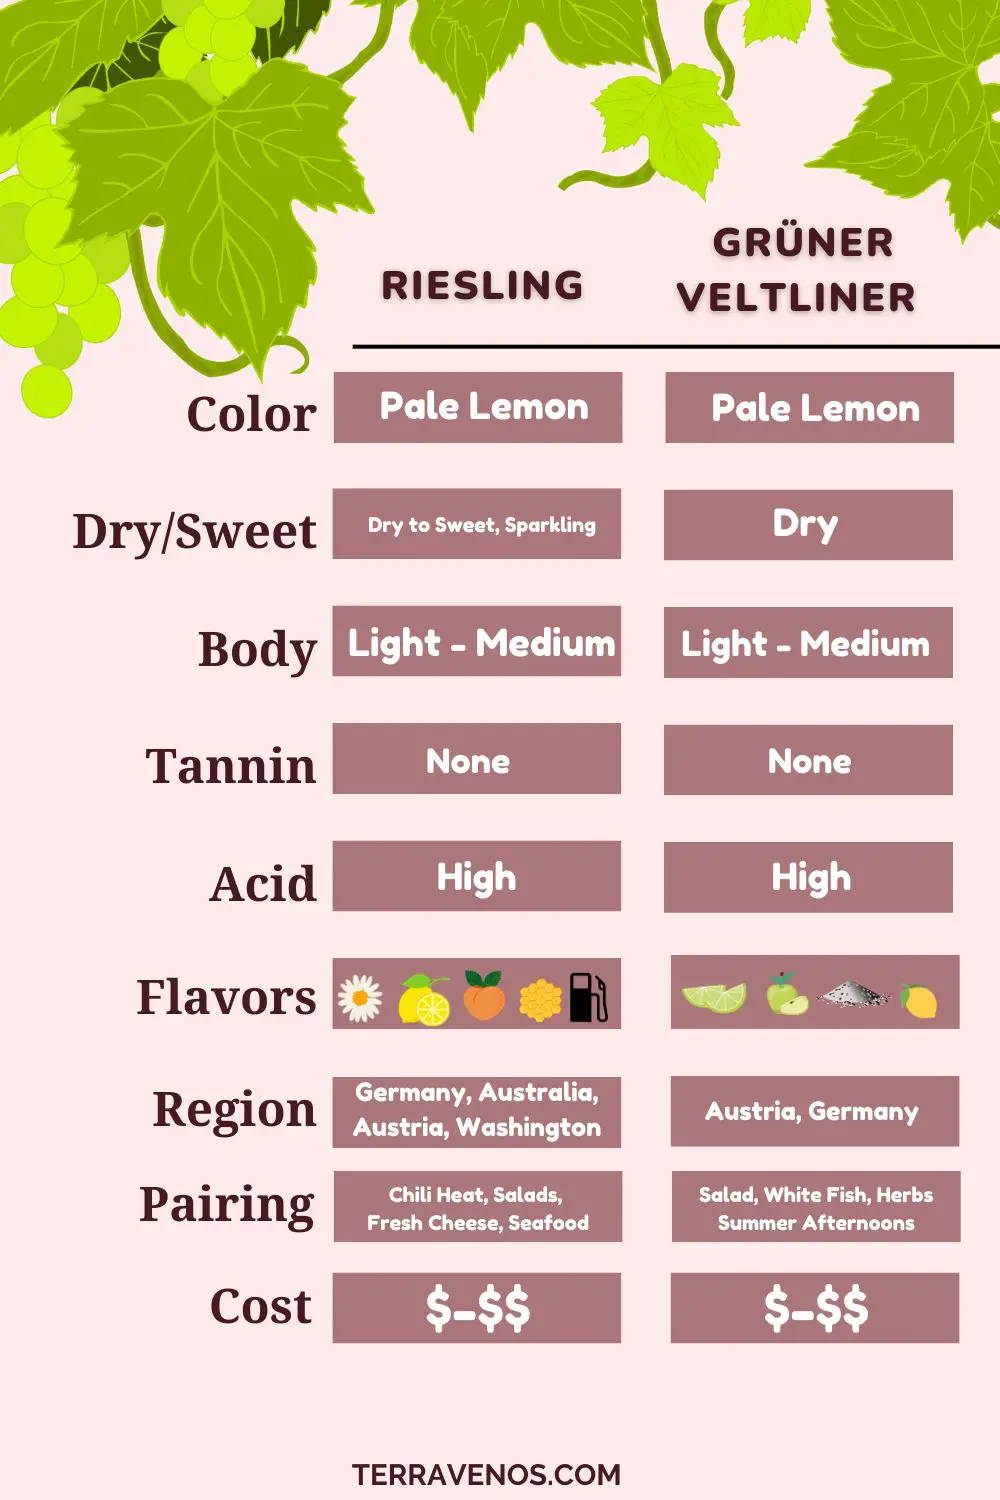 gruner-veltliner-vs-riesling-infographic